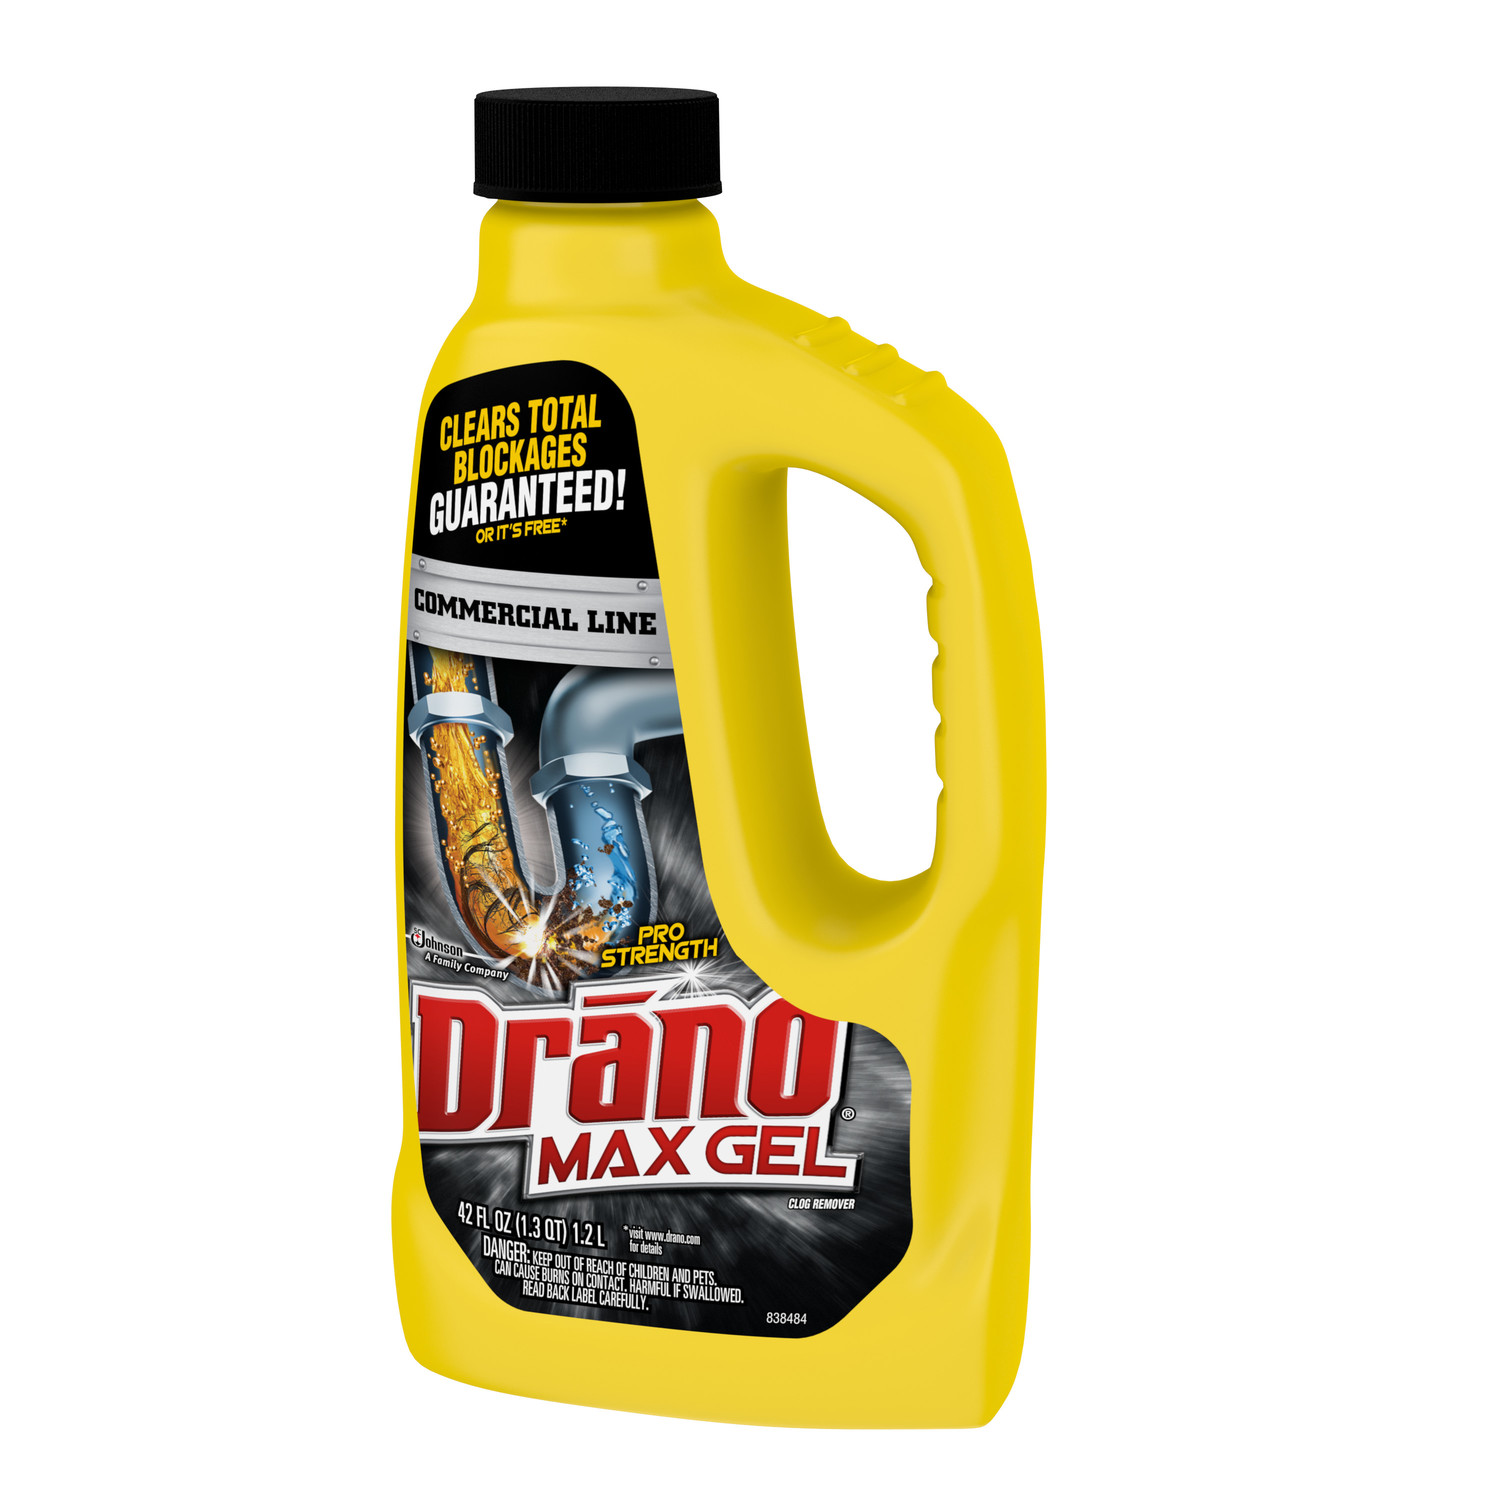 Drano max gel